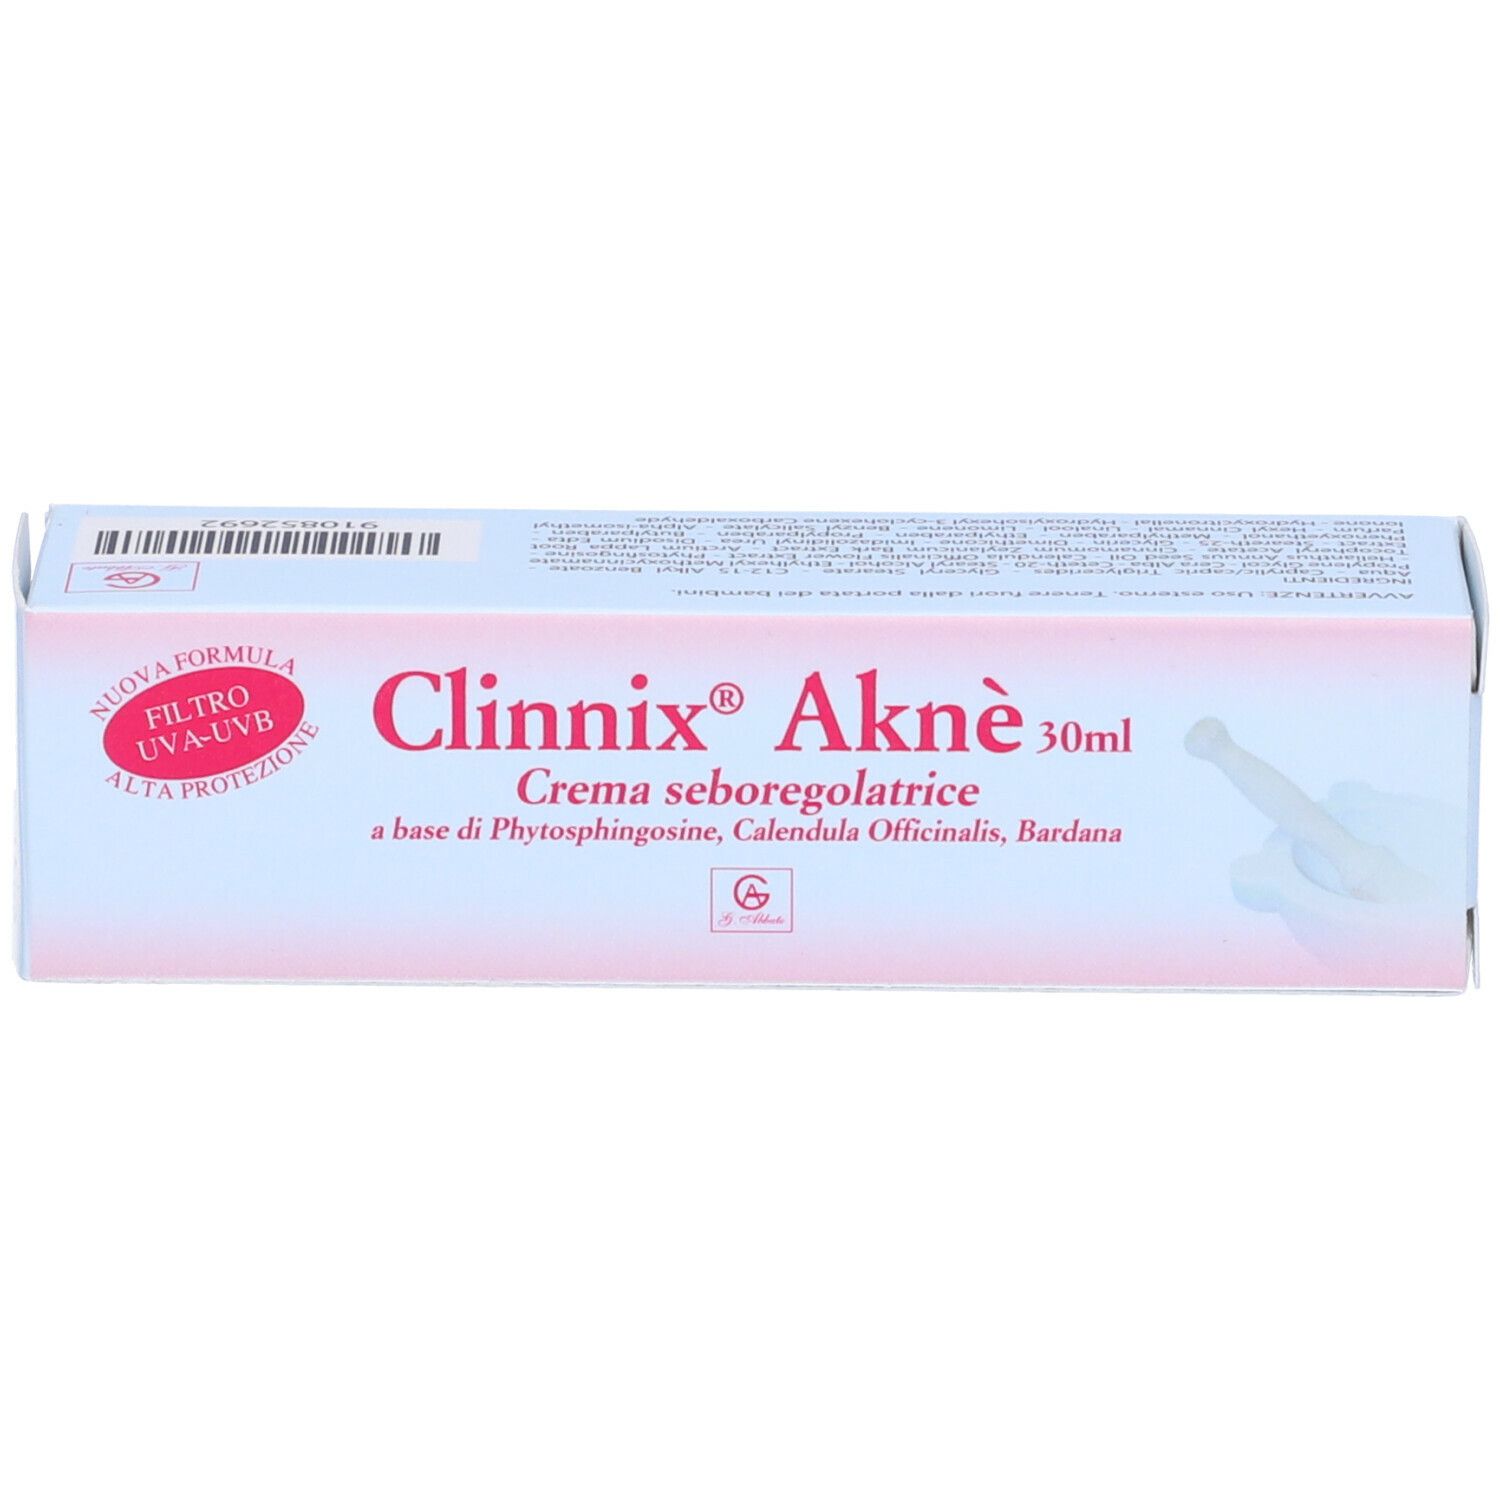 Clinnix Akne Crema Seboregolatrice